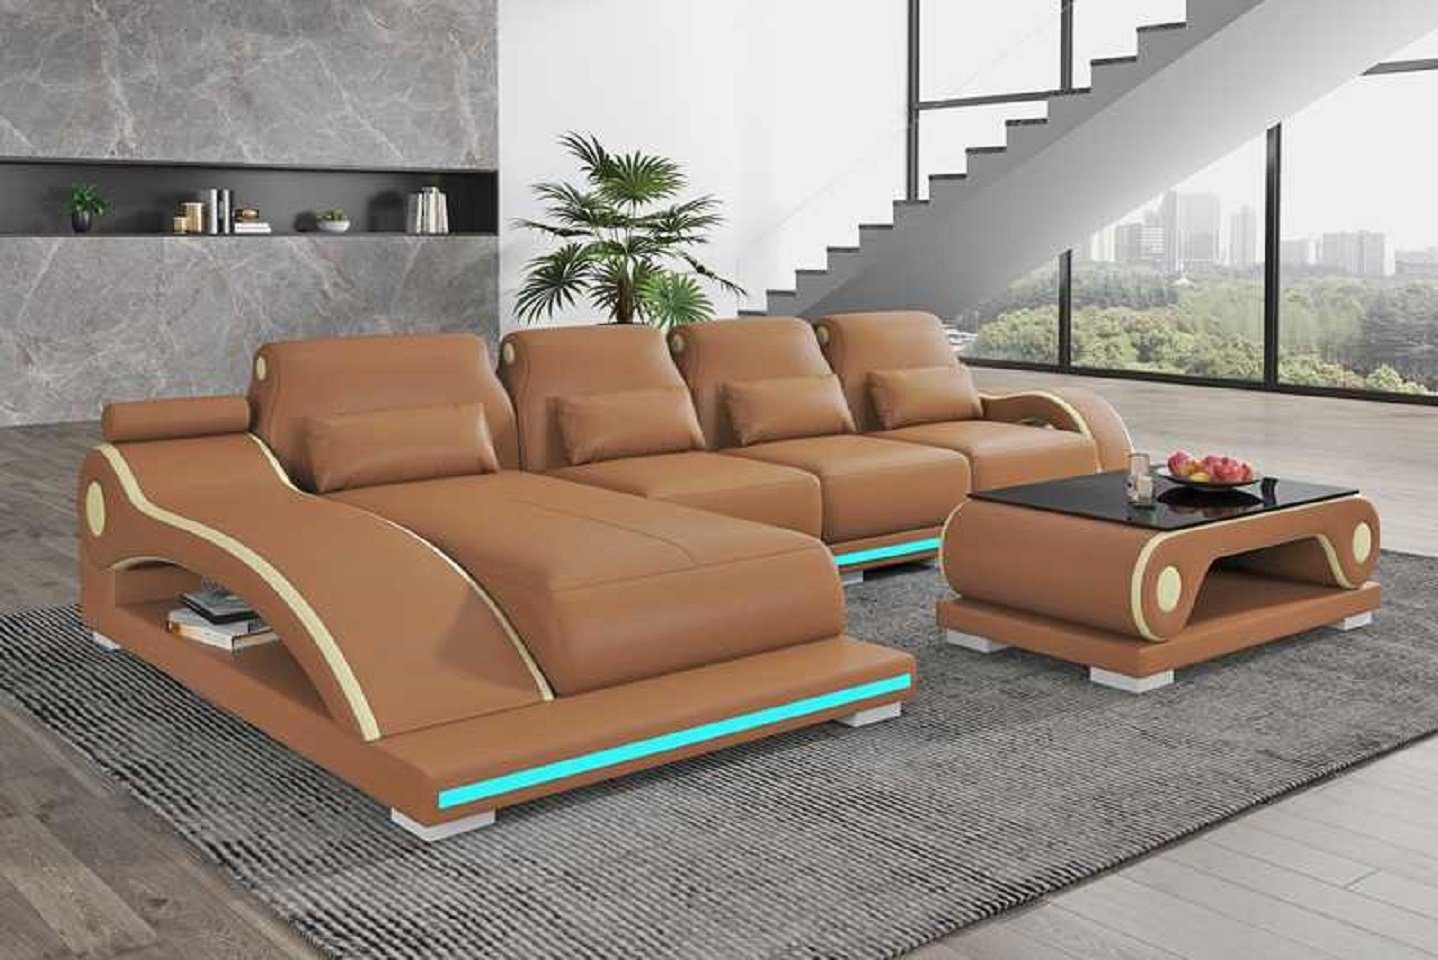 JVmoebel Ecksofa Luxus Ecksofa L Teile, Form in 3 Sofa Europe Braun Made Sofa Couch, Liege Moderne